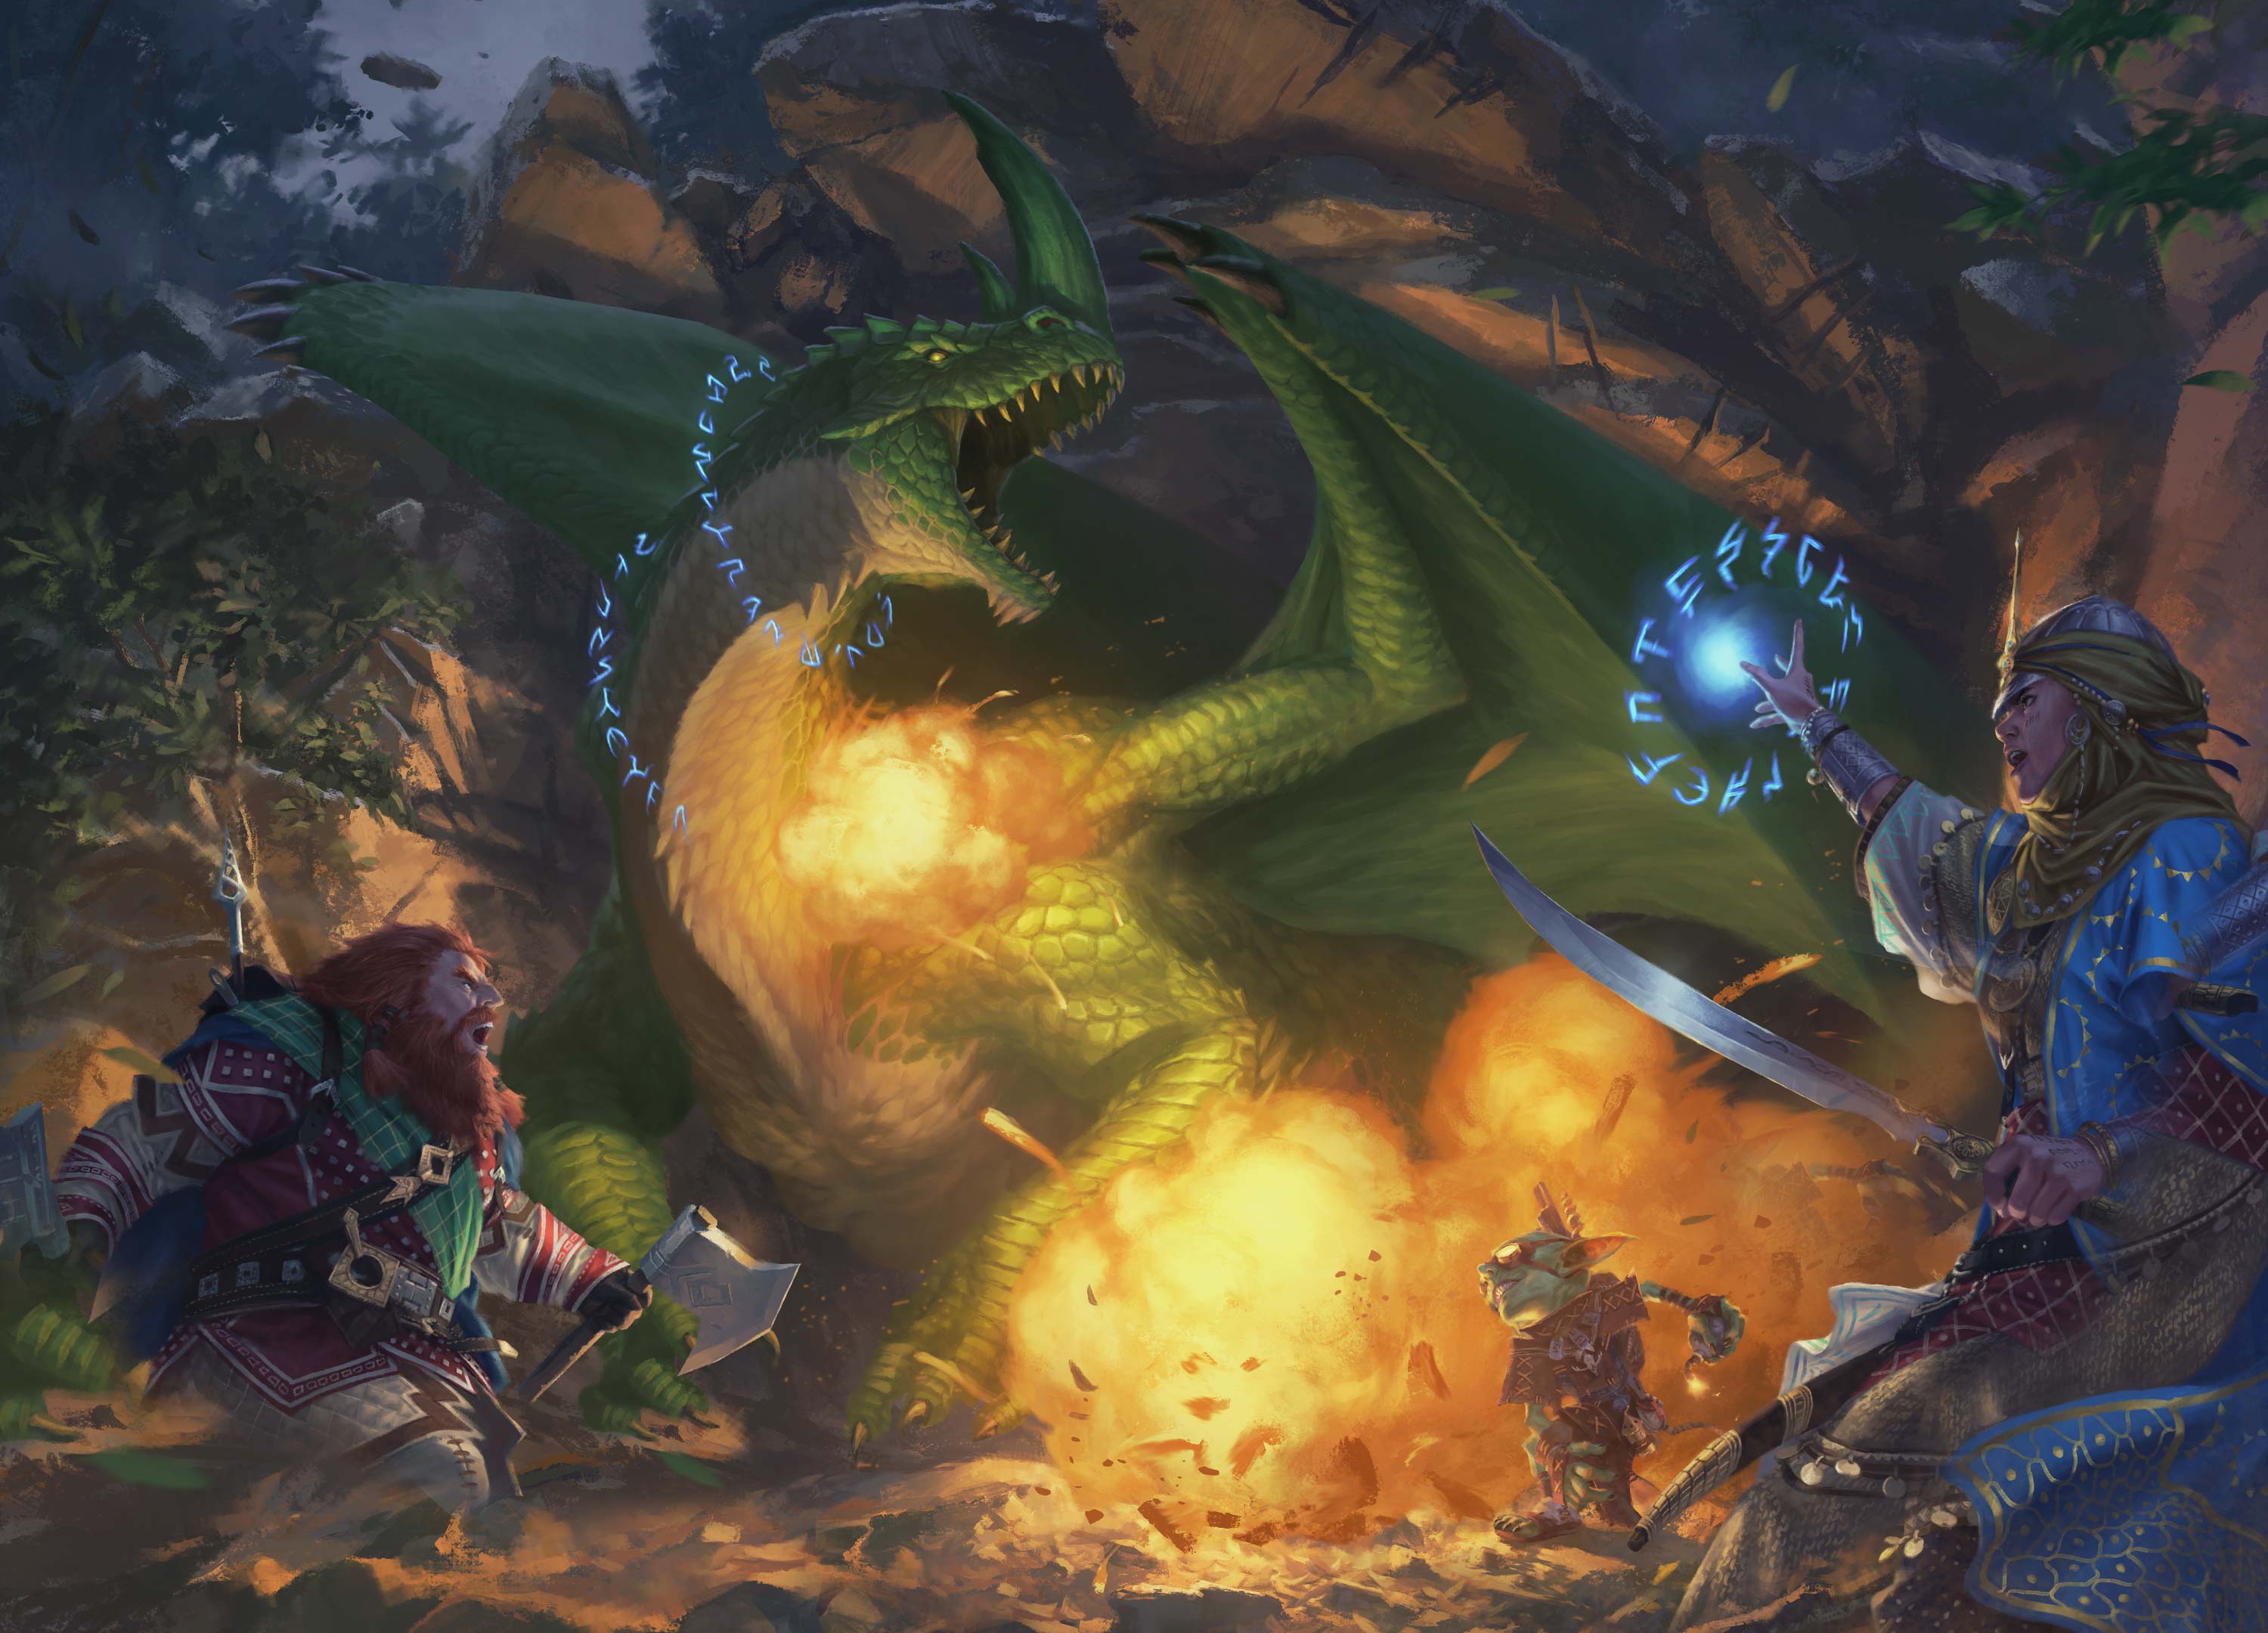 Pathfinder iconics Kyra, Harsk, and Fumbus battling a large green dragon